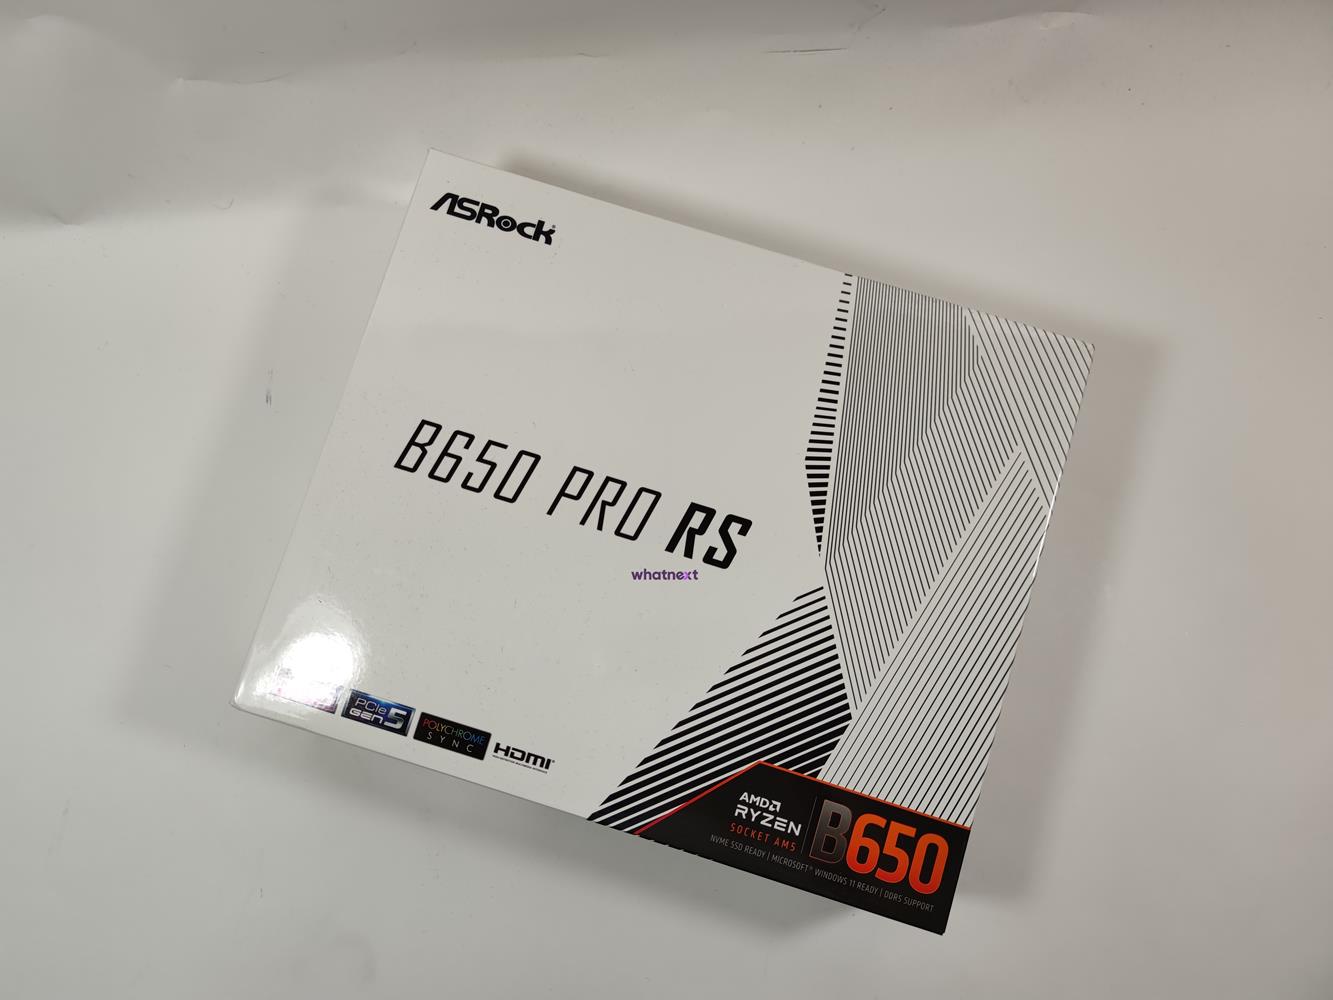 test ASRock B650 Pro RS, recenzja ASRock B650 Pro RS, opinia ASRock B650 Pro RS